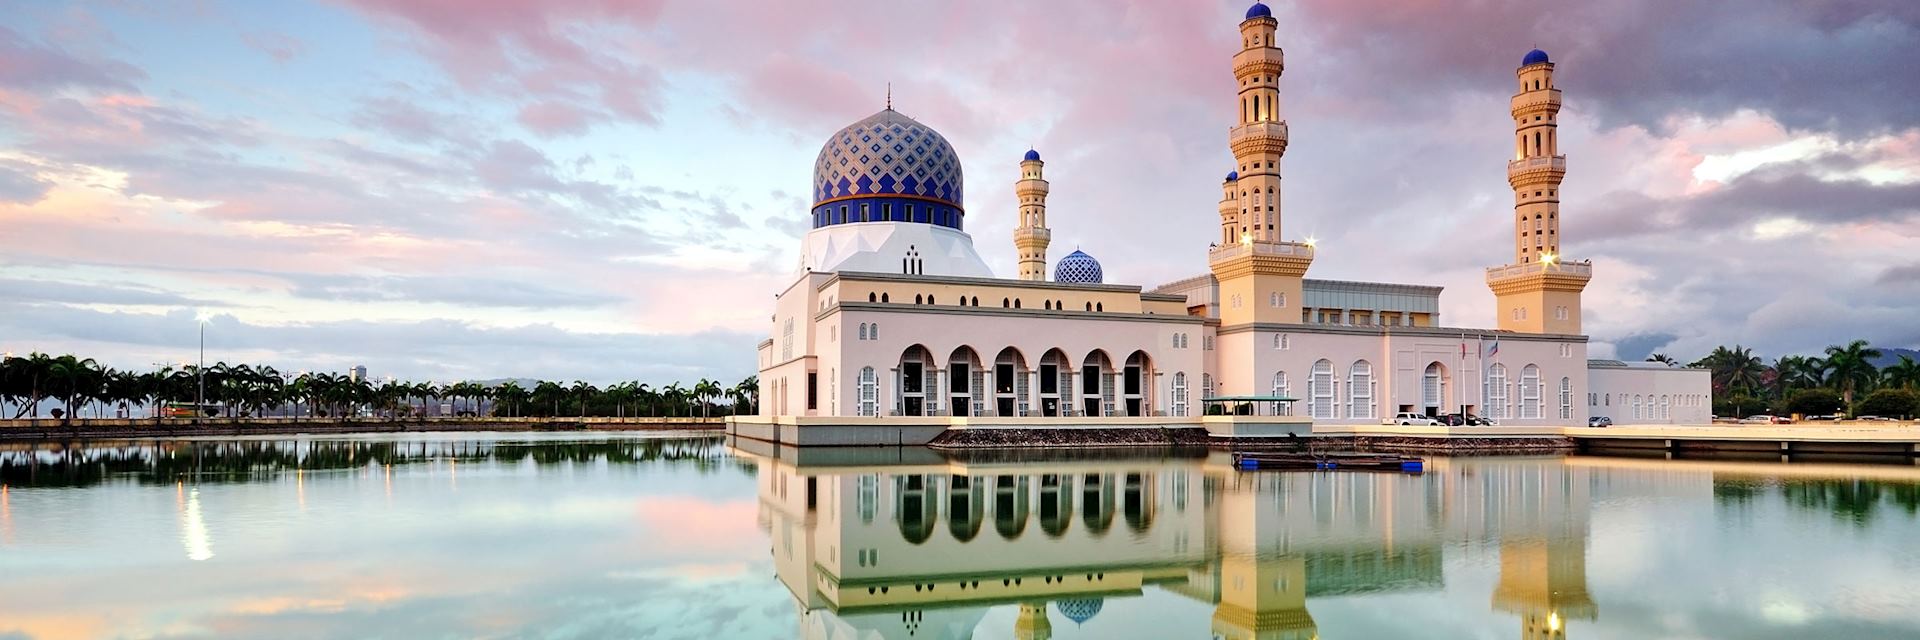 City Mosque in Kota Kinabalu